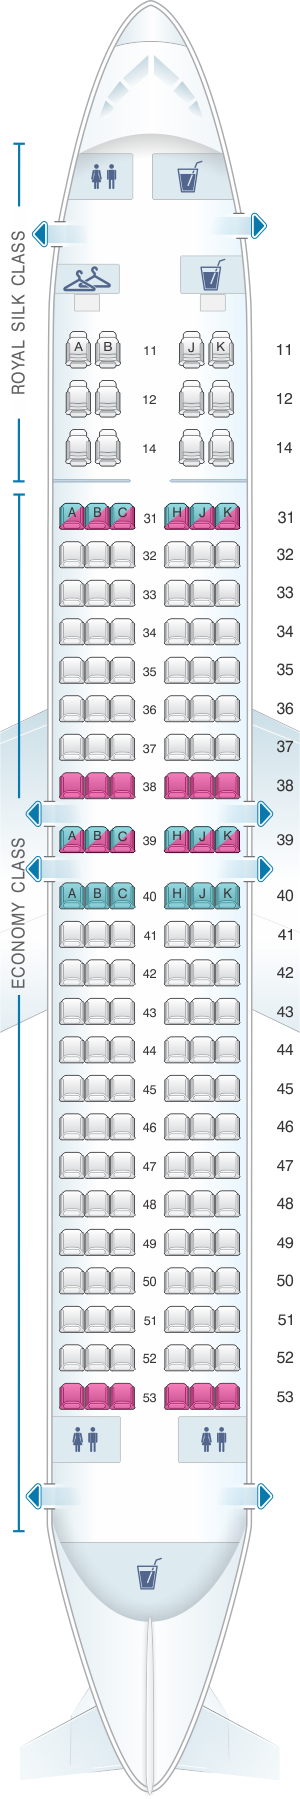 Seat map for Thai Airways International Boeing B737 400